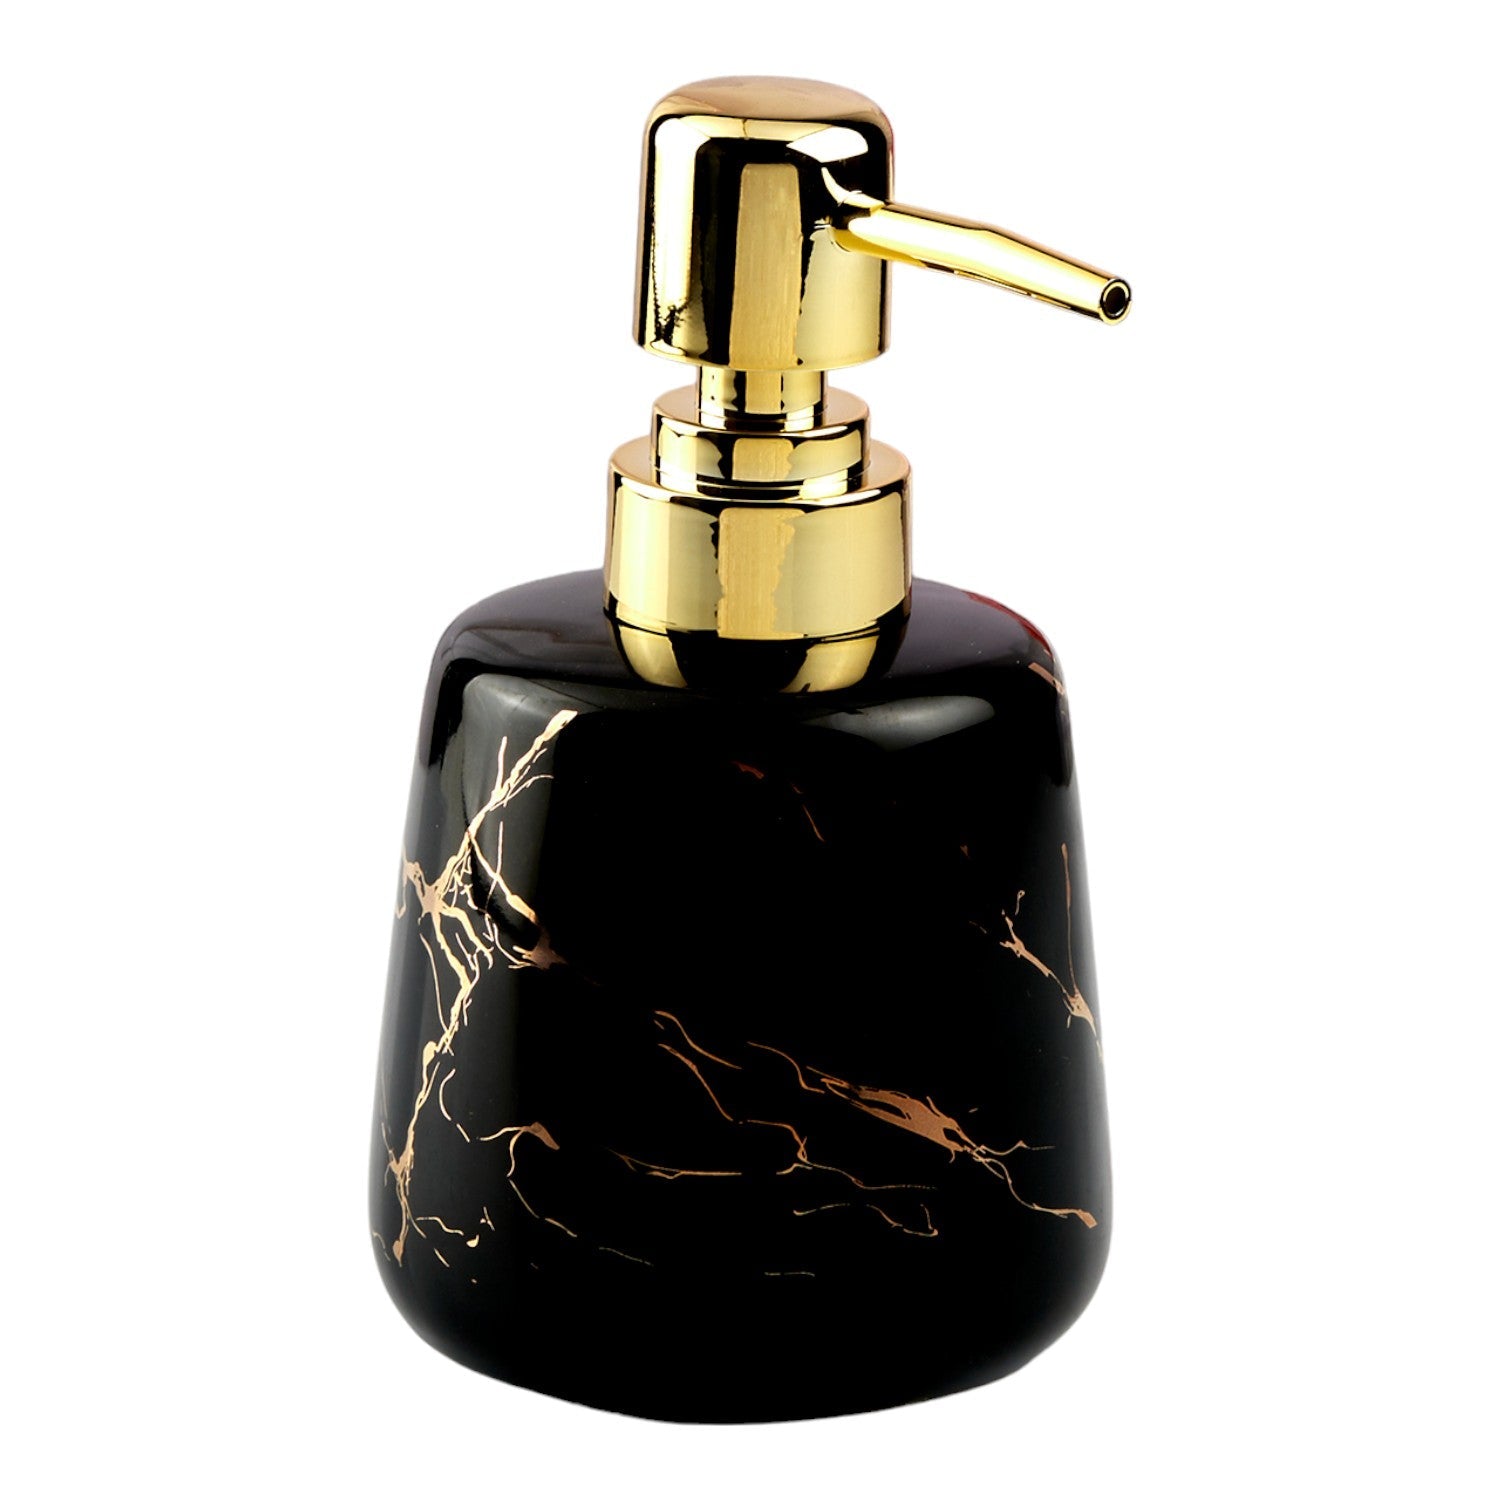 Ceramic Soap Dispenser liquid handwash pump for Bathroom, Set of 1, Black (10728)